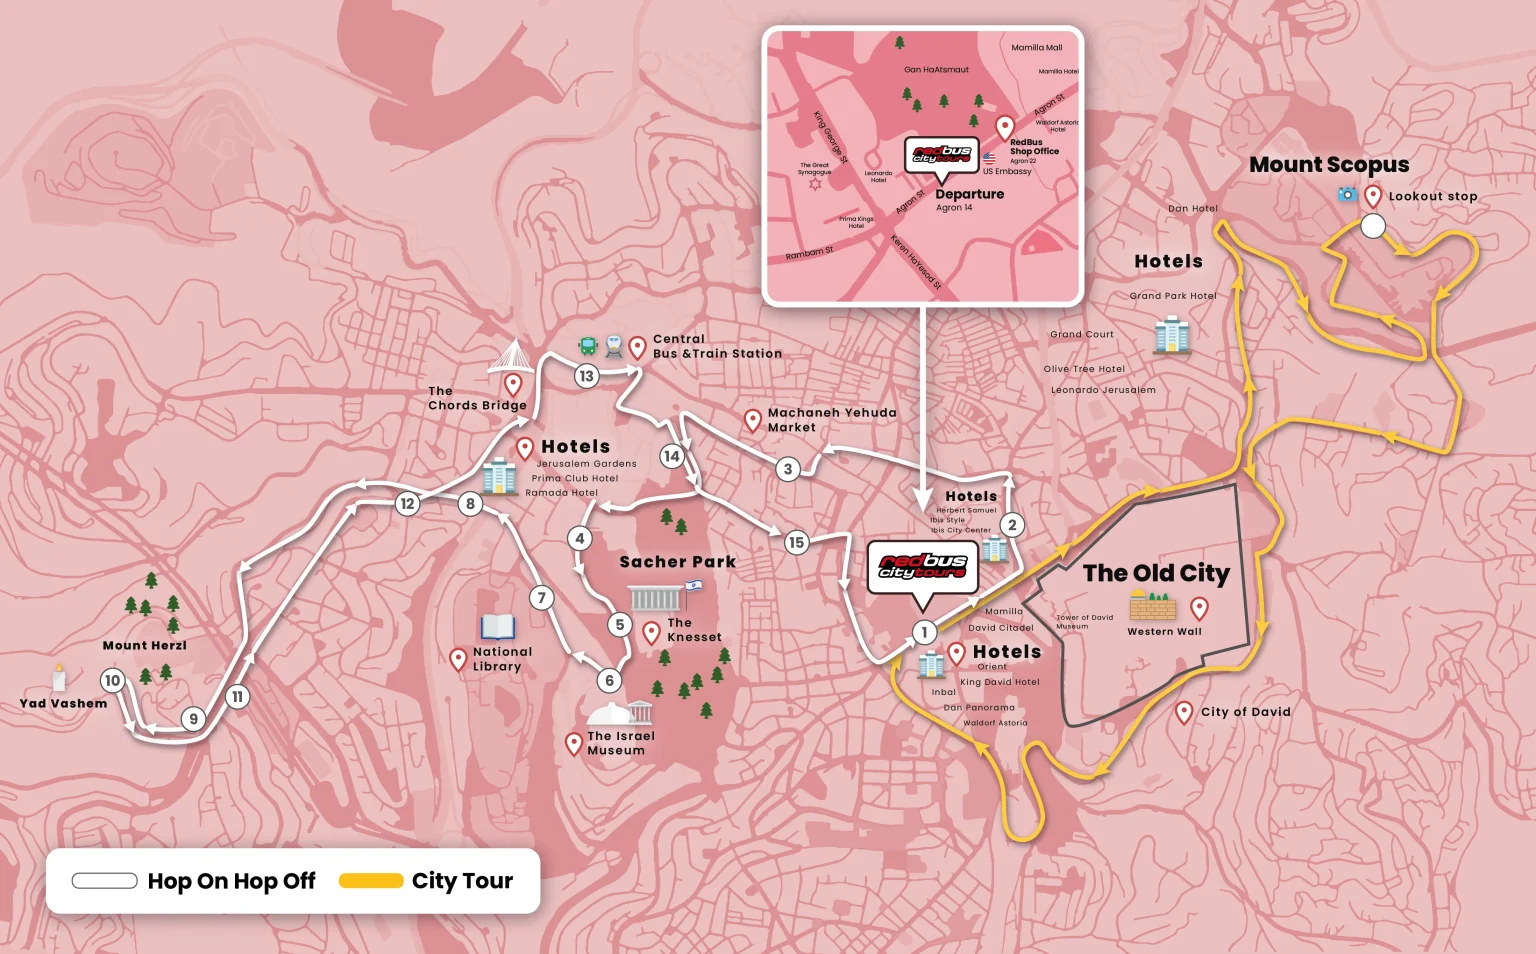 Red Bus City Tour Map of Jerusalem